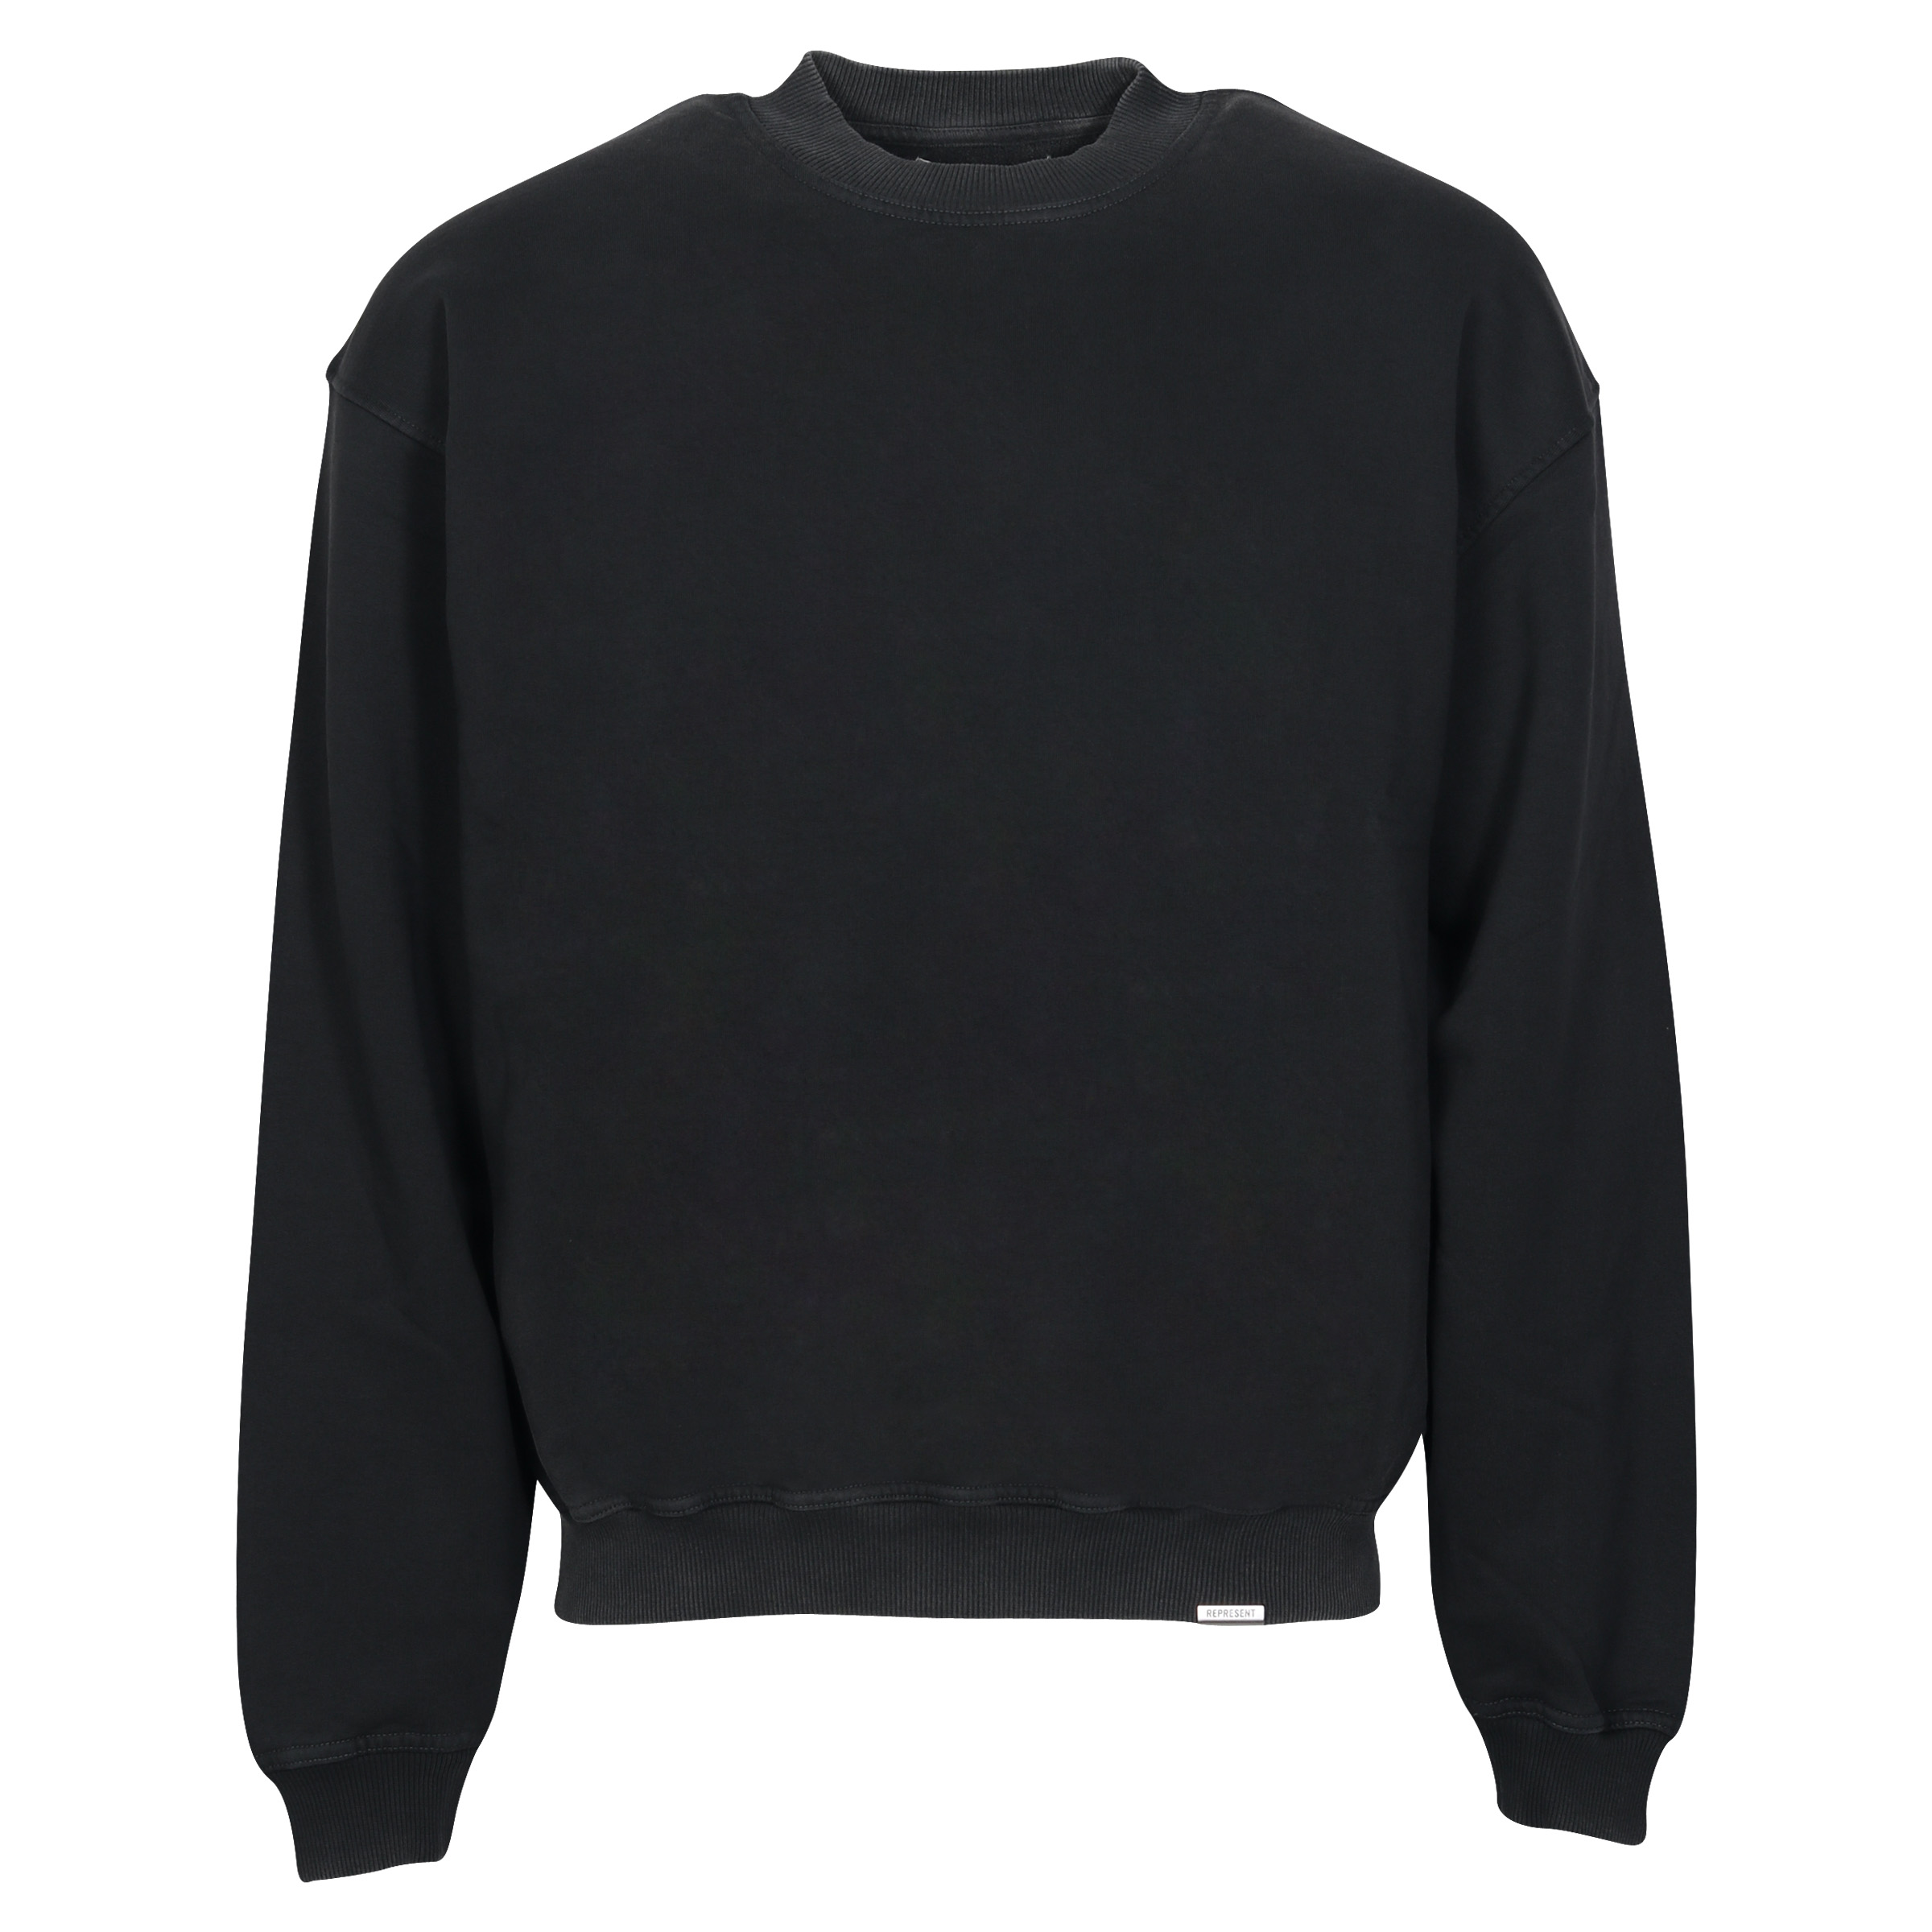 Represent Blank Sweater in Vintage Black